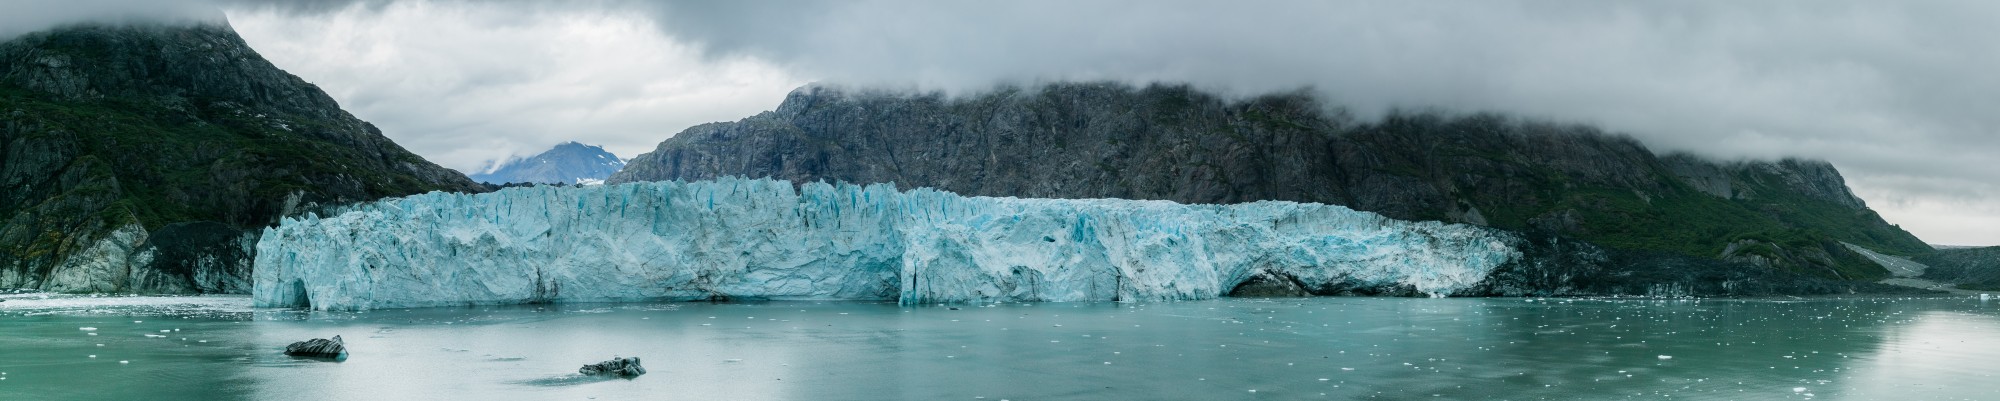 Glaciar Margerie, Parque Nacional Bahía del Glaciar, Alaska, Estados Unidos, 2017-08-19, DD 36-40 PAN